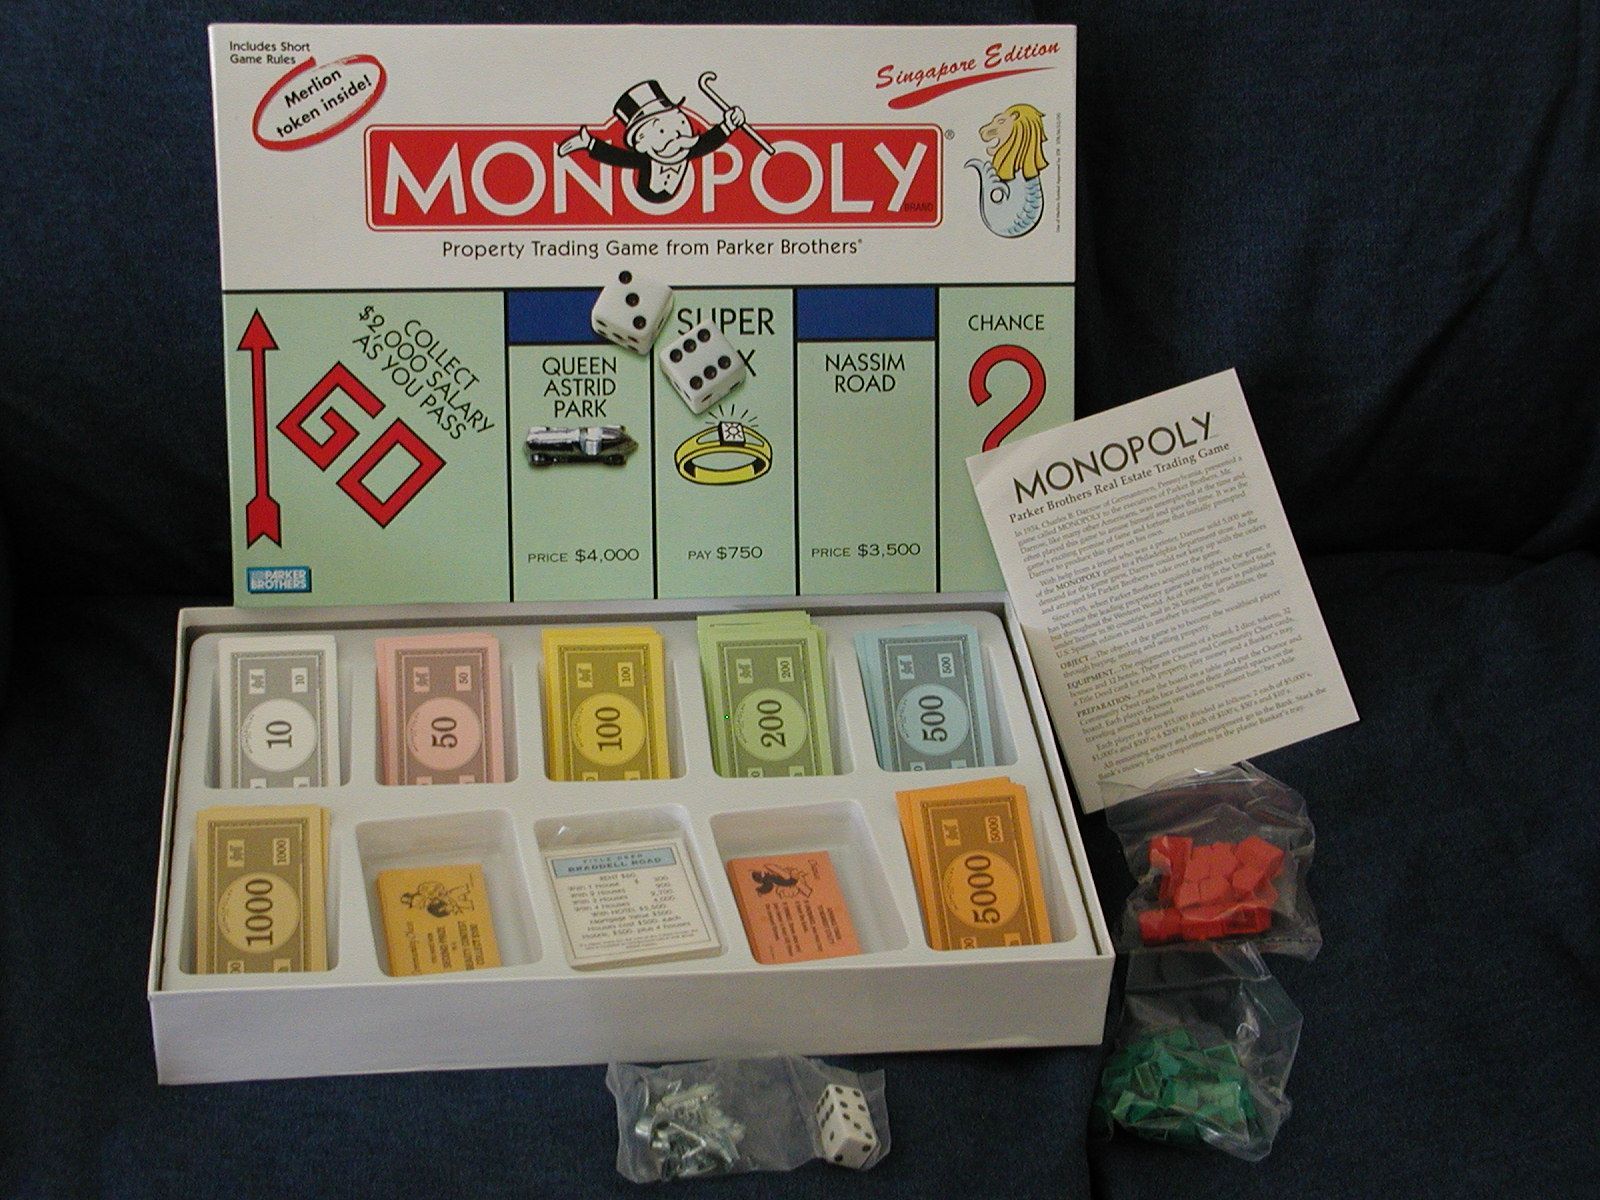 Monopoly: Singapore